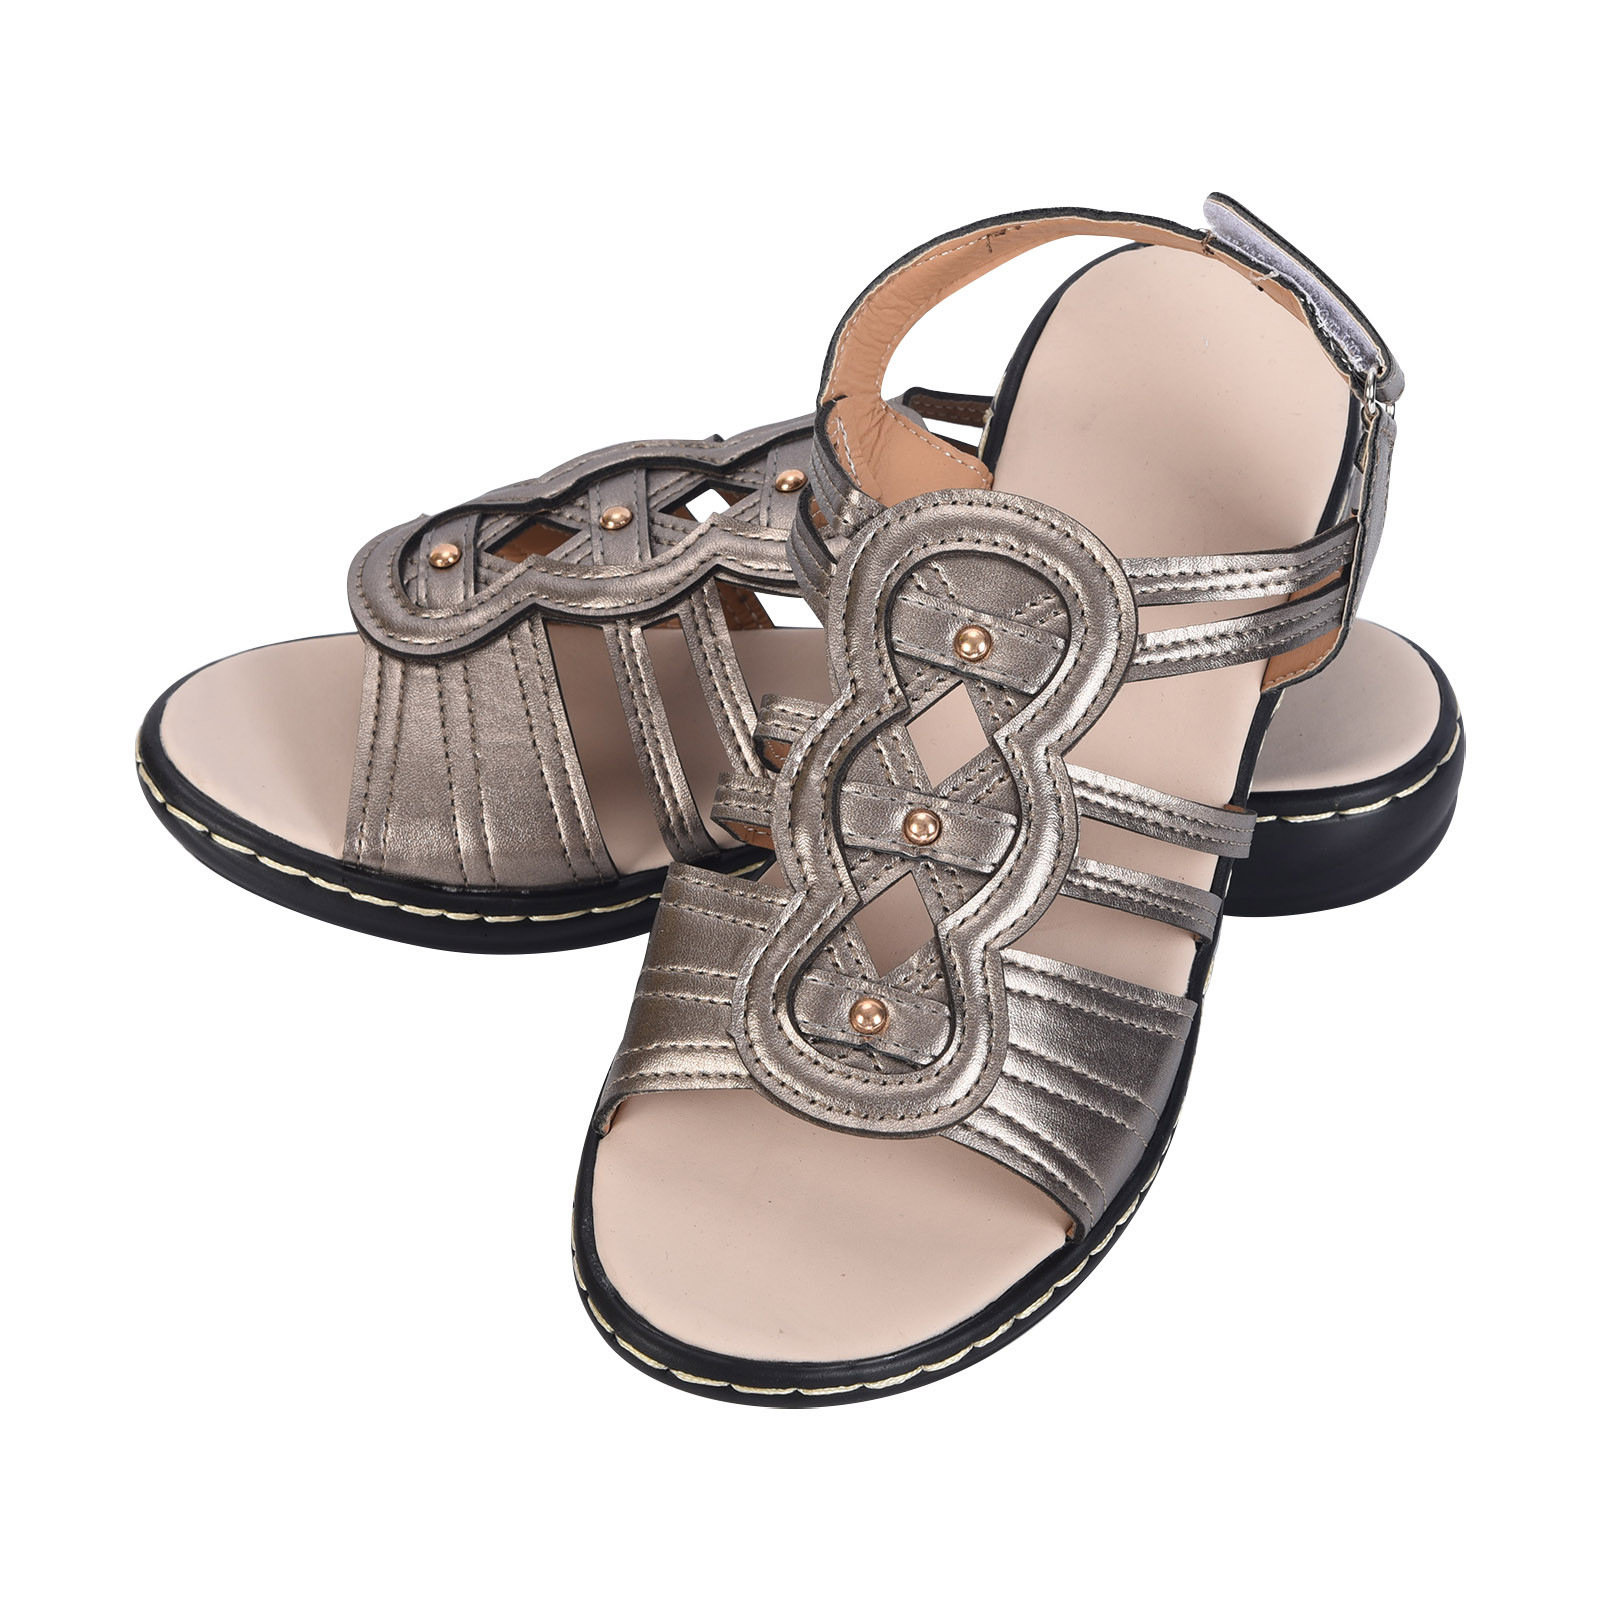 Honeeladyy closed toe sandals for women Women Ladies Fashion Slope Heel ...